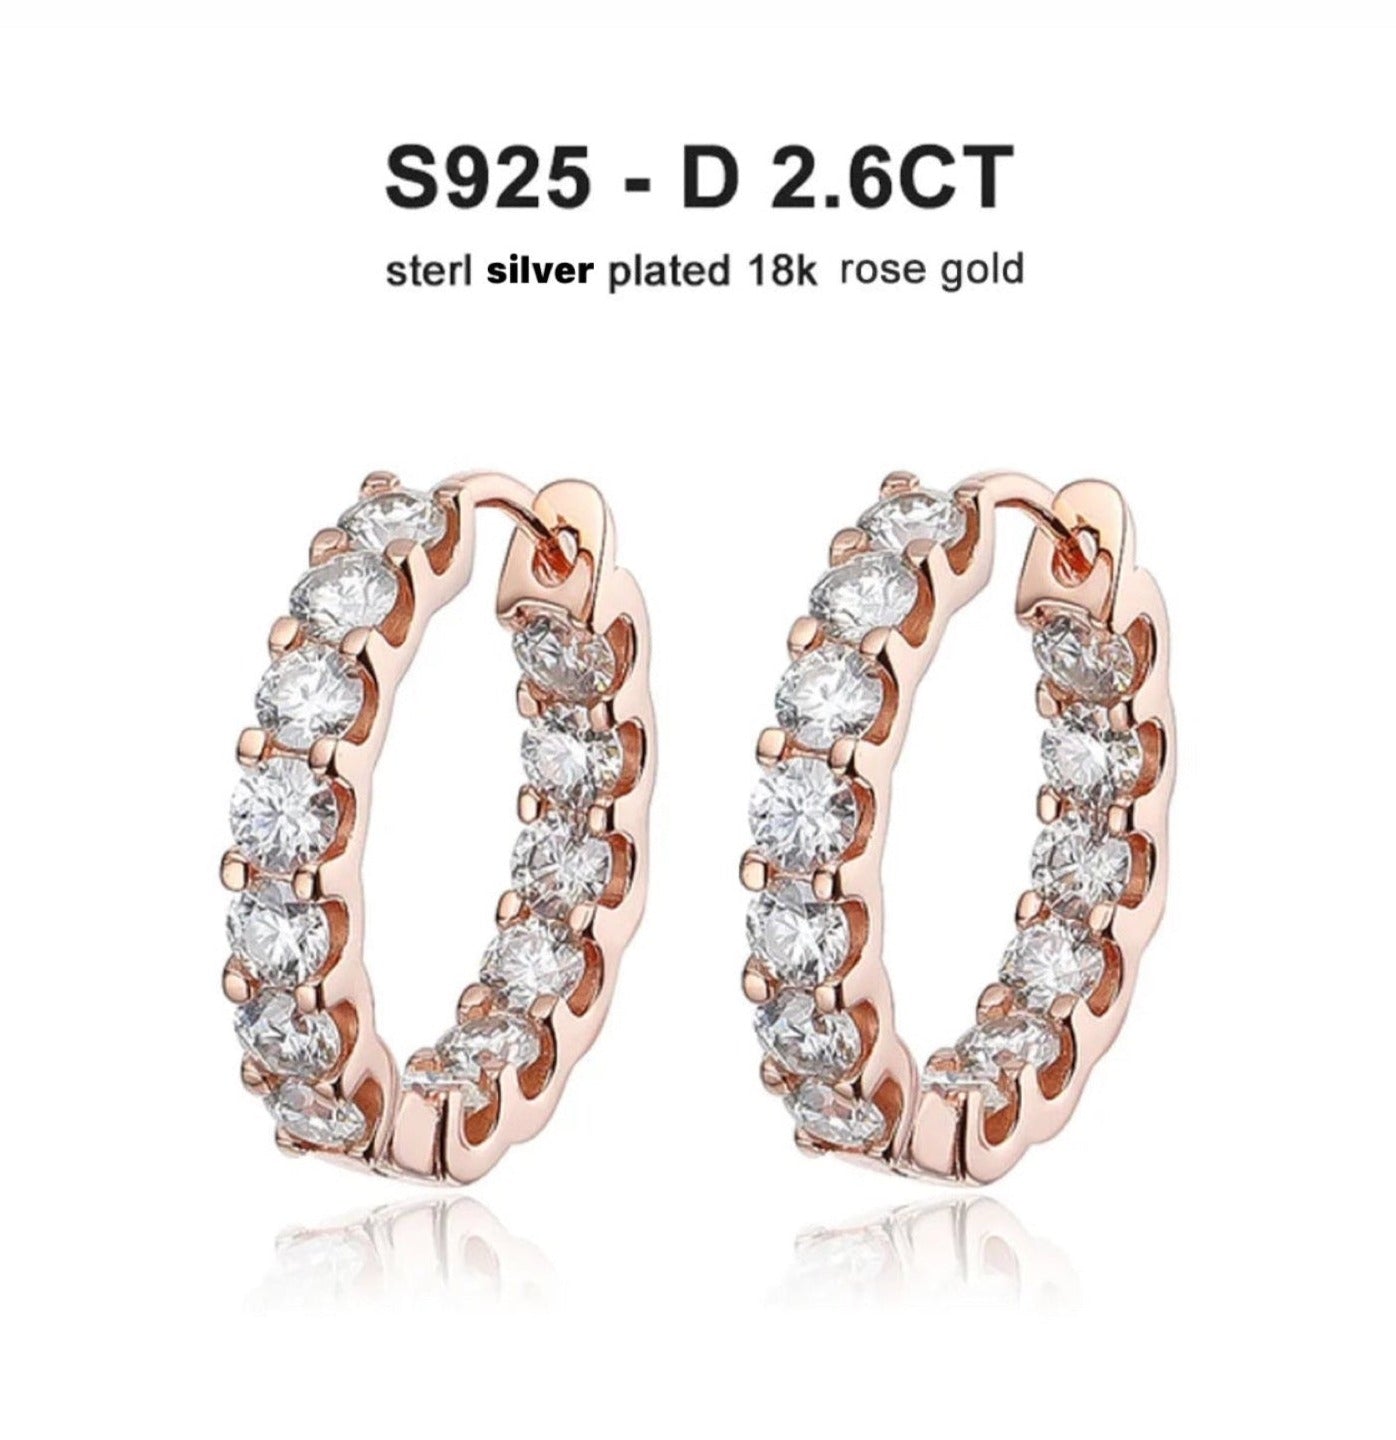 Radiant Spark Moissanite Earrings - Timeless Elegance in 925 Sterling Silver and Gold Plating